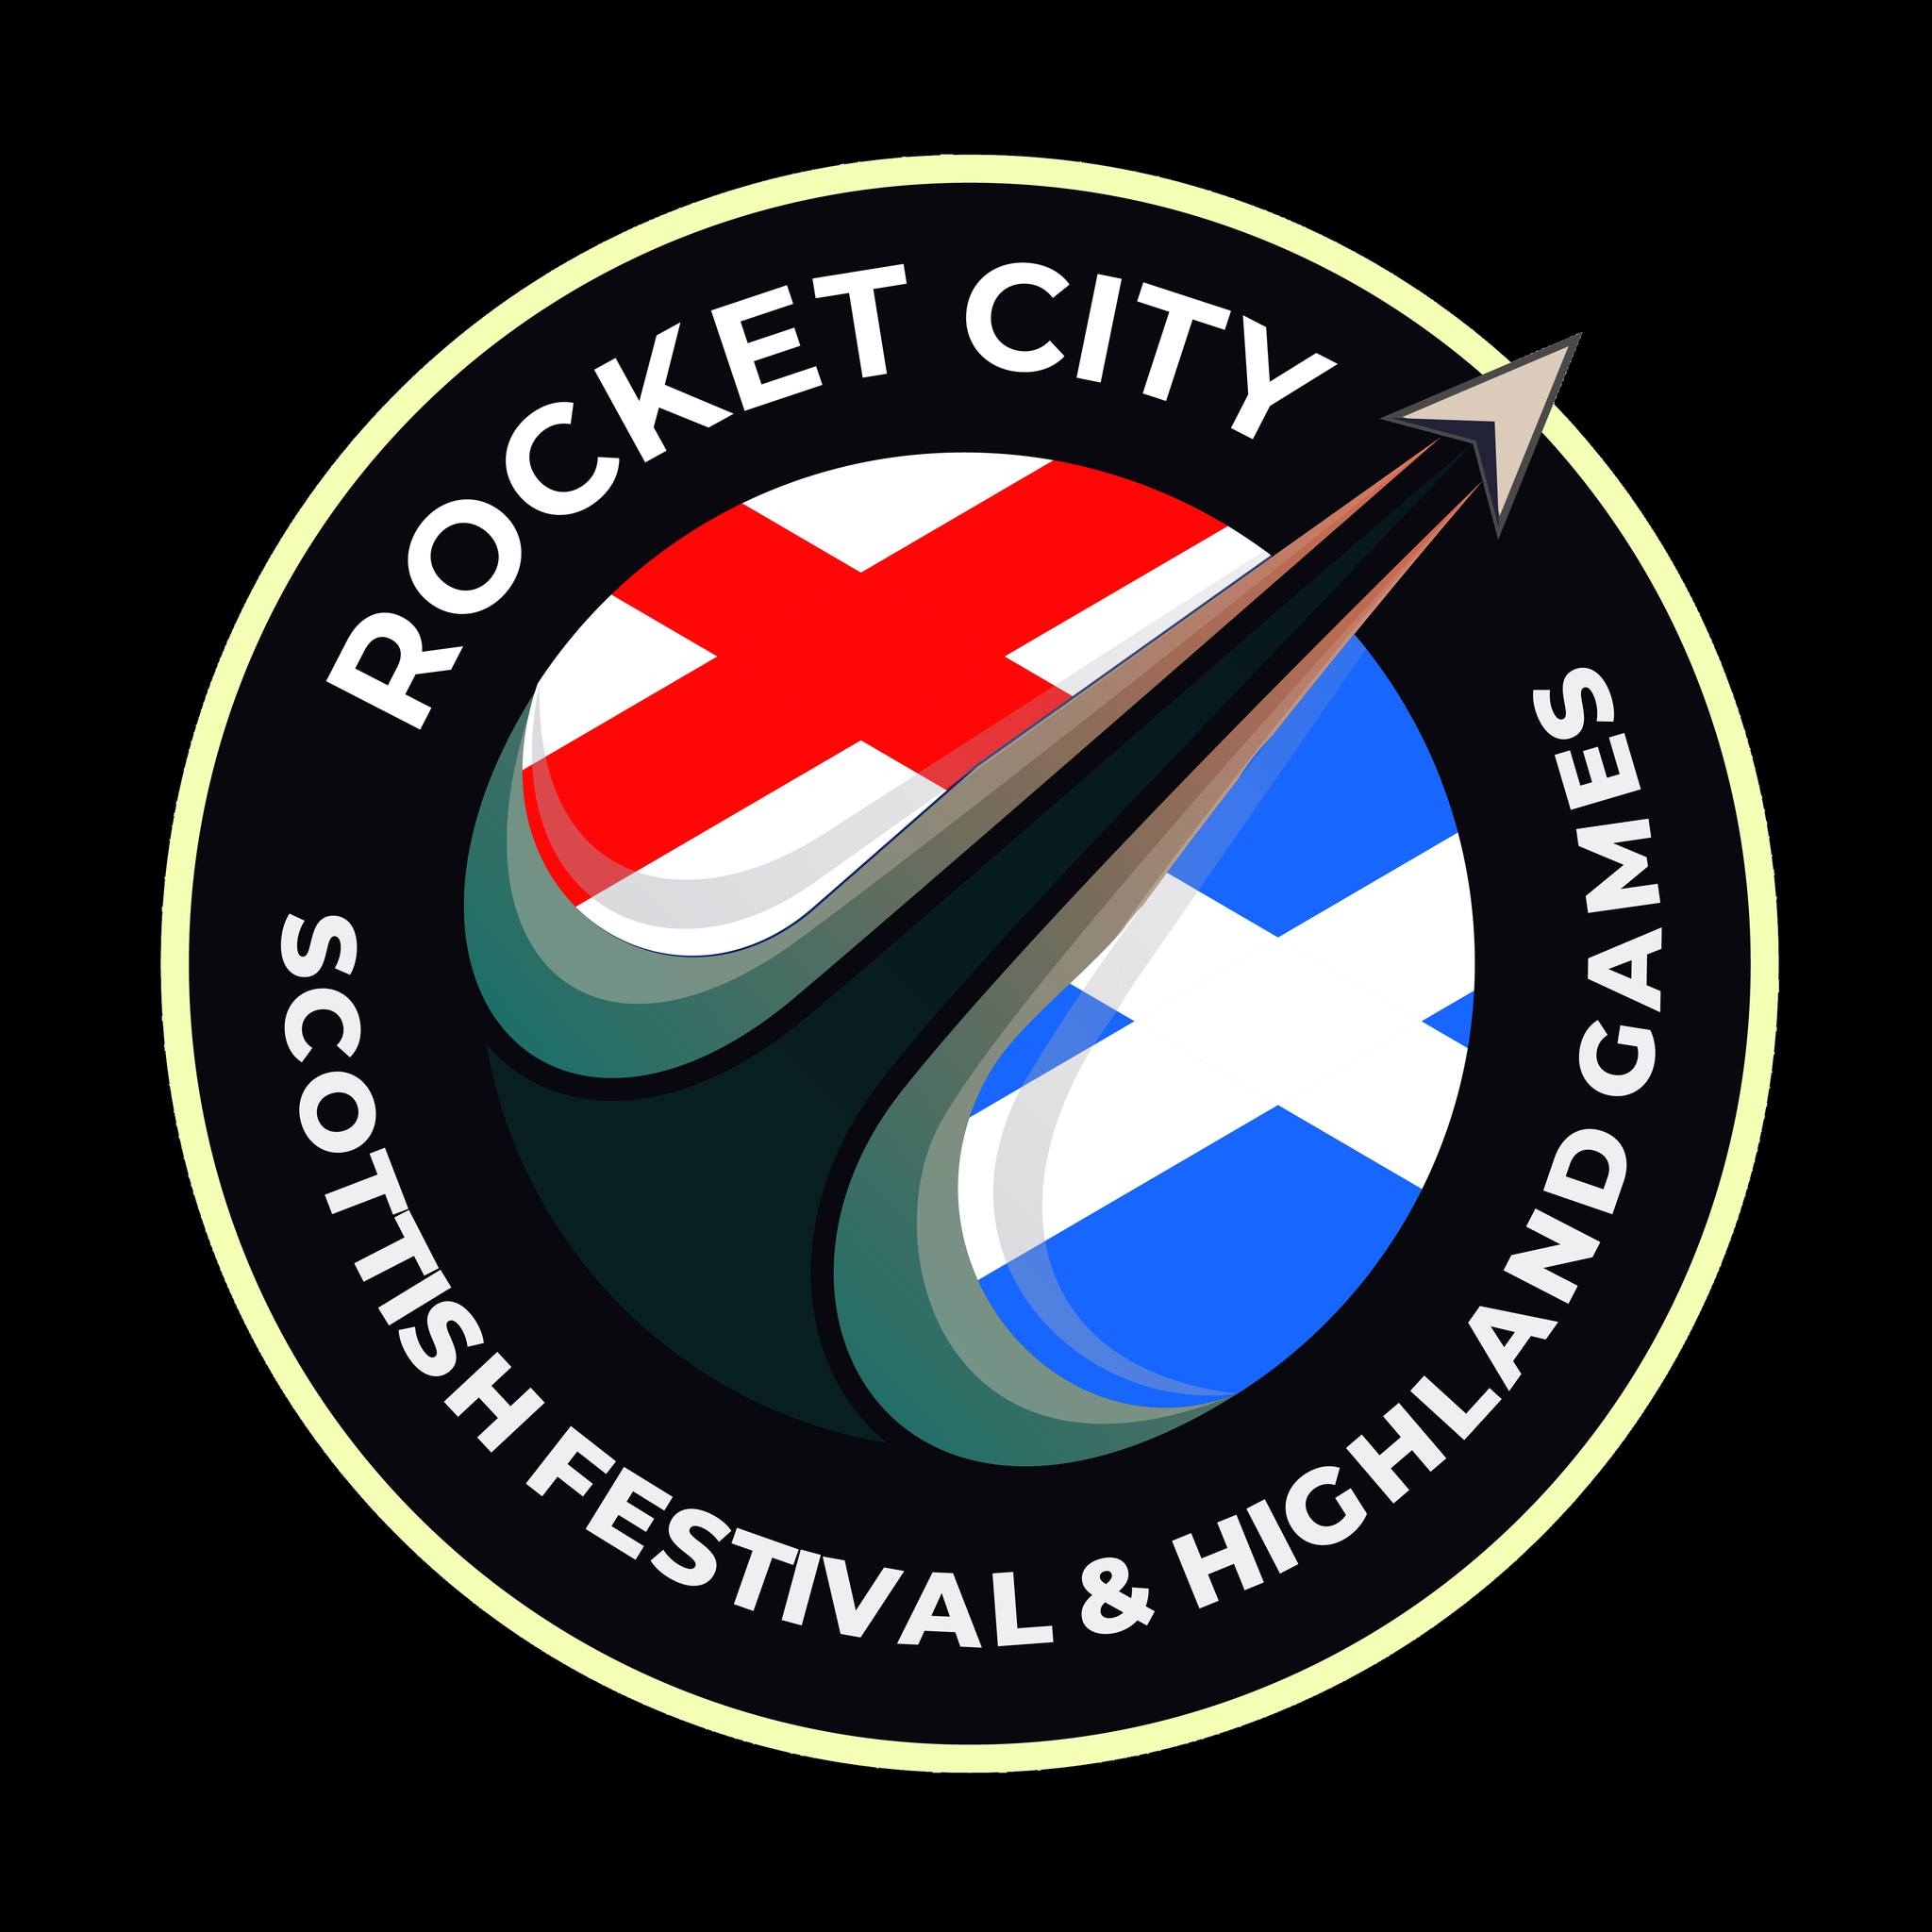 Rocket City Scottish Festival & Highland Games